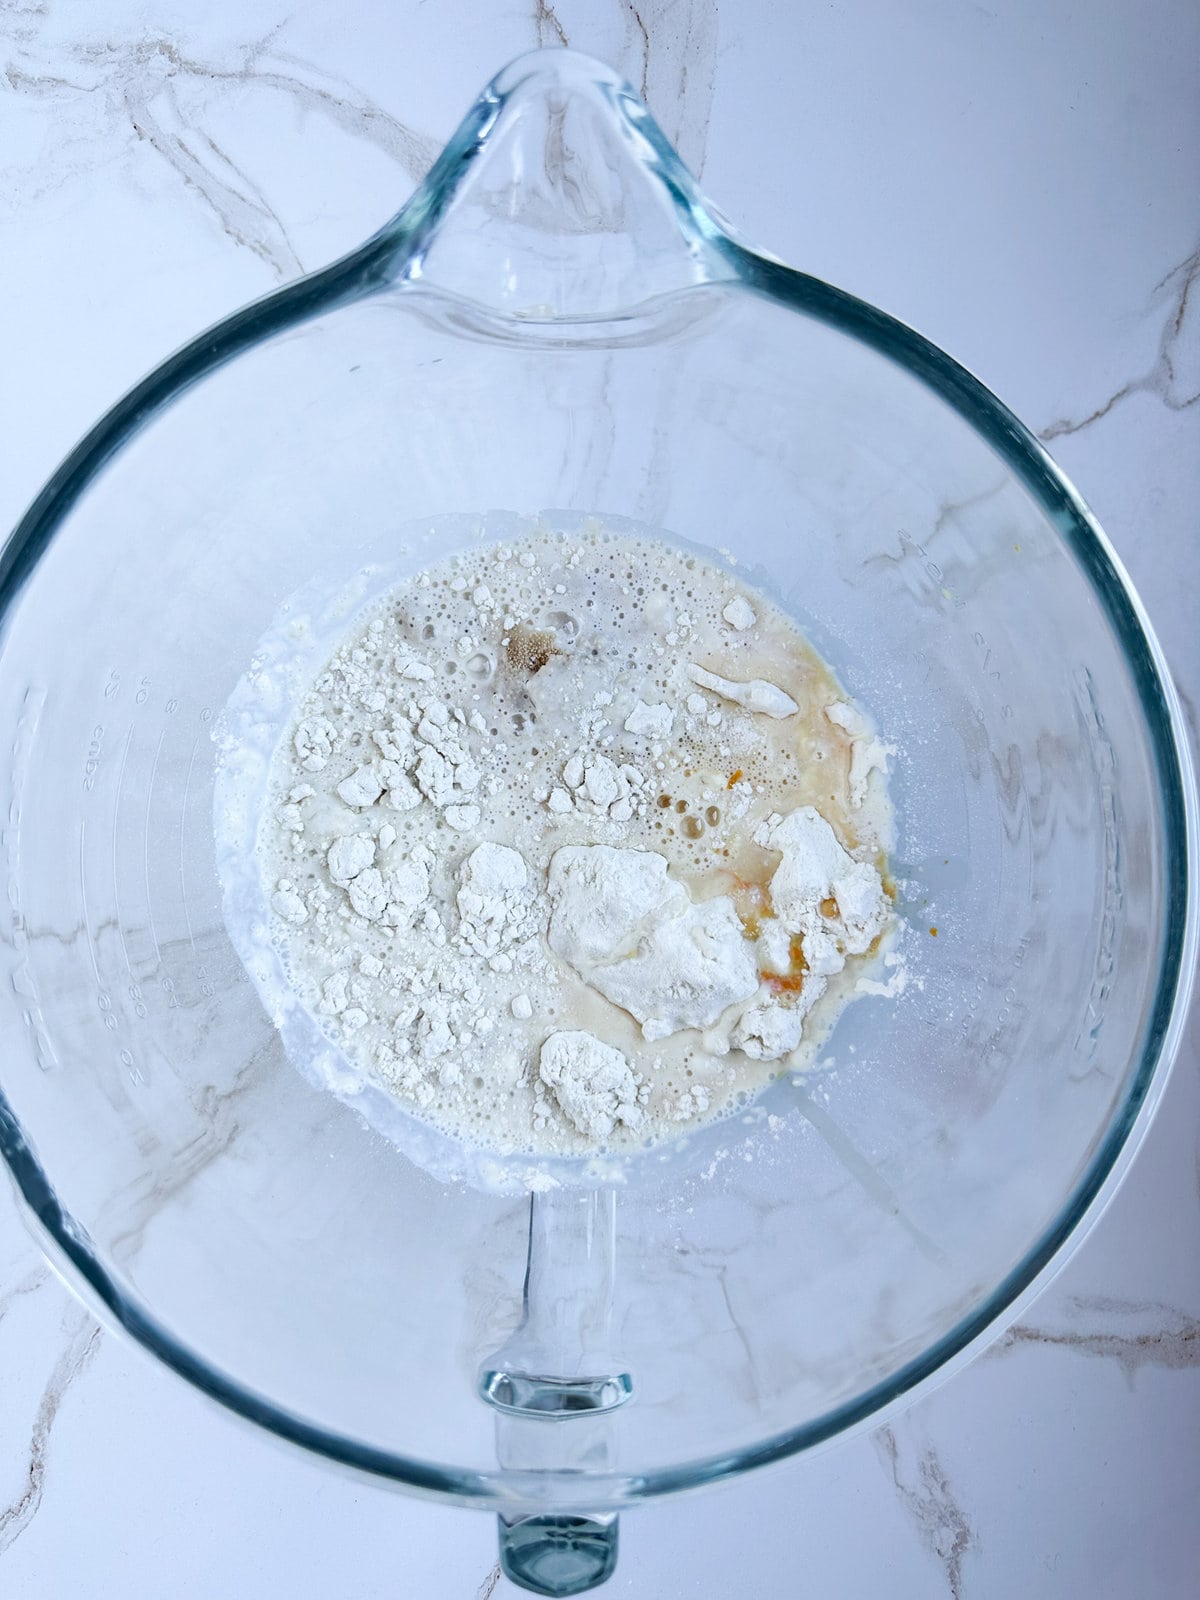 making zeppole dough- adding wet ingredients to dry ingredients